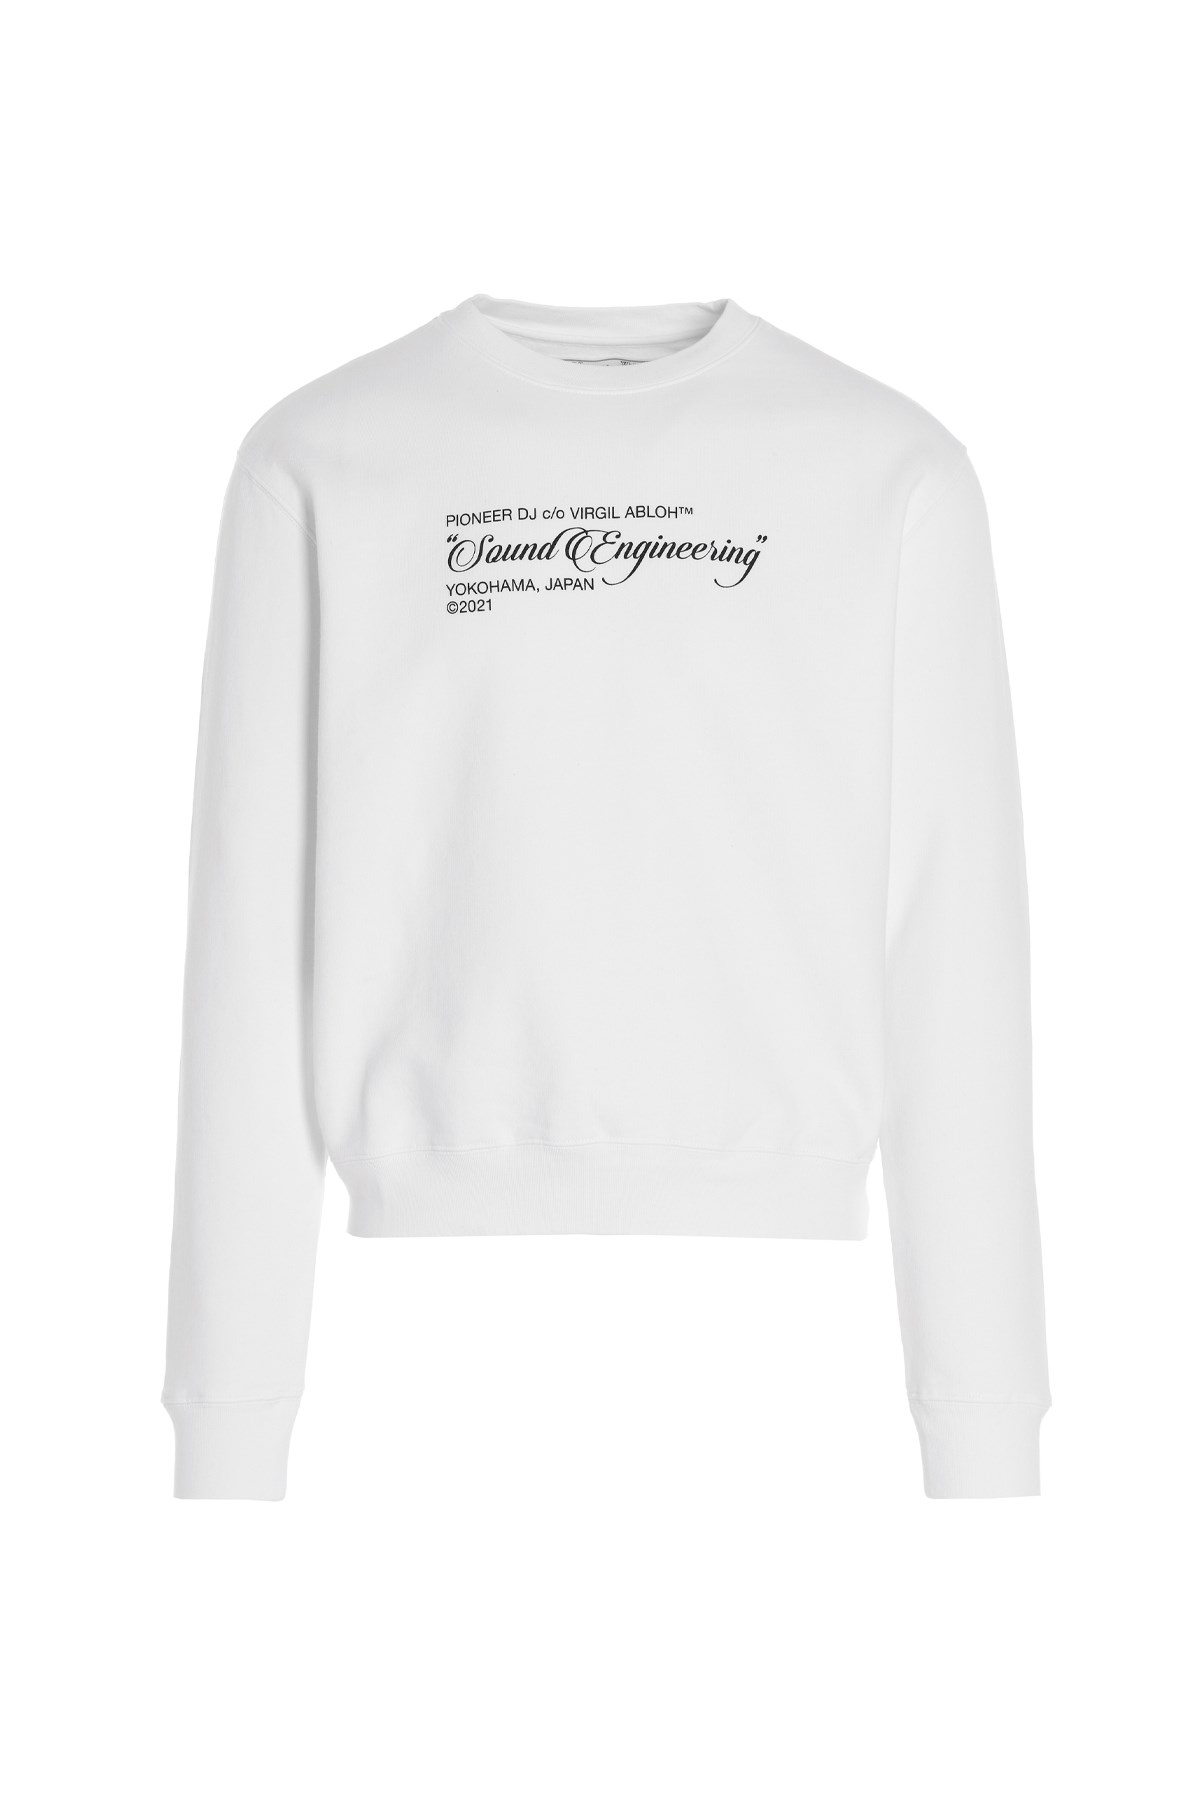 OFF-WHITE  Pioneer Dj C/O Off-White™ 'Console' Sweatshirt